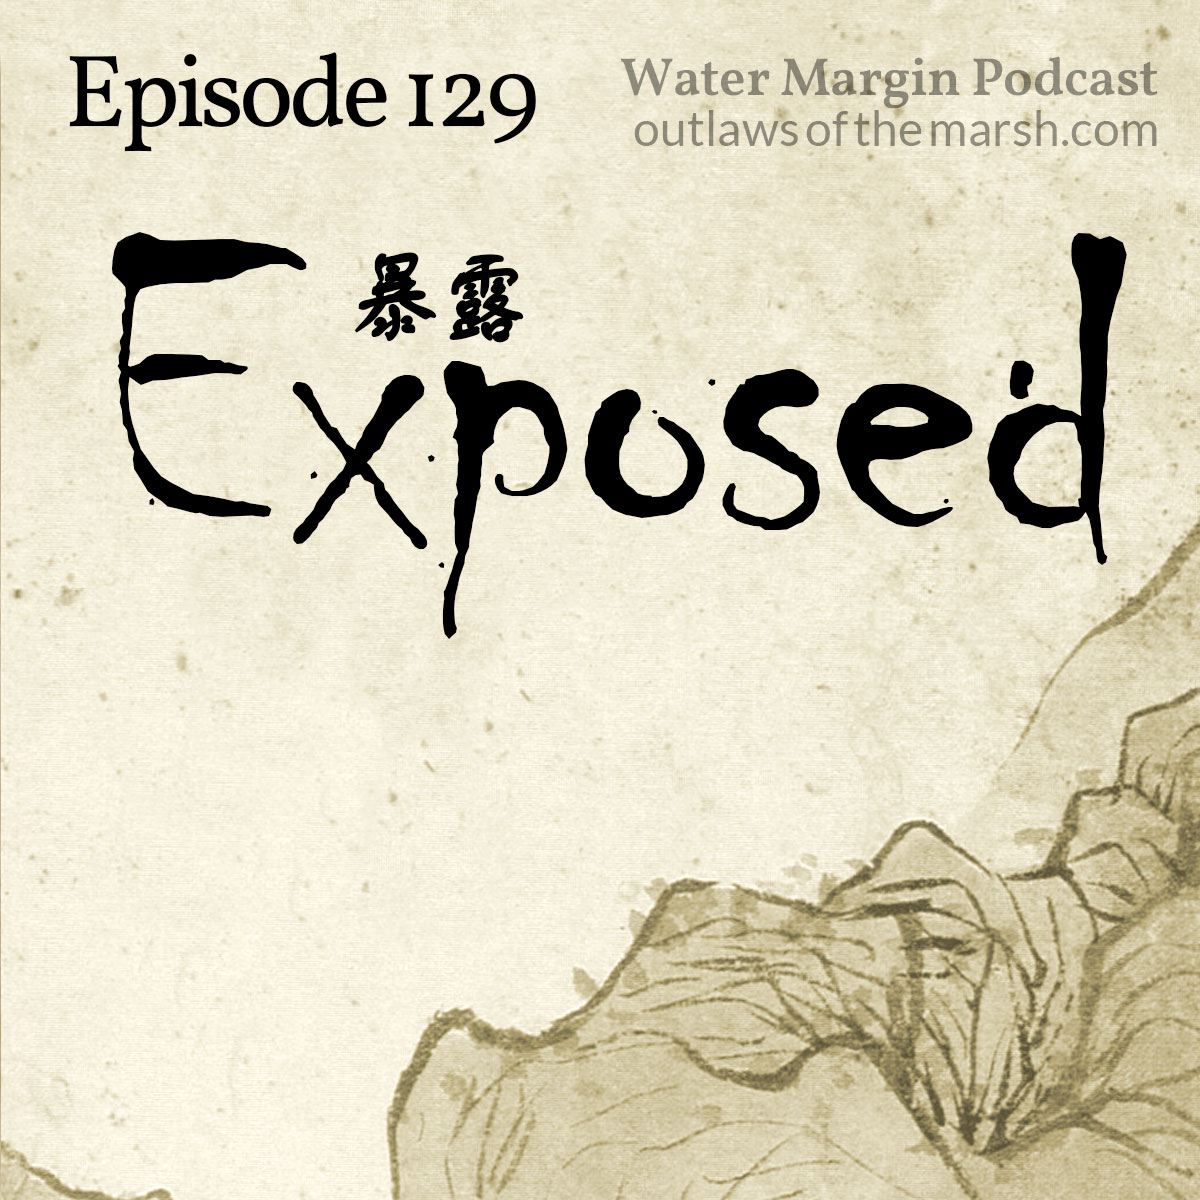 Water Margin Podcast: Episode 129